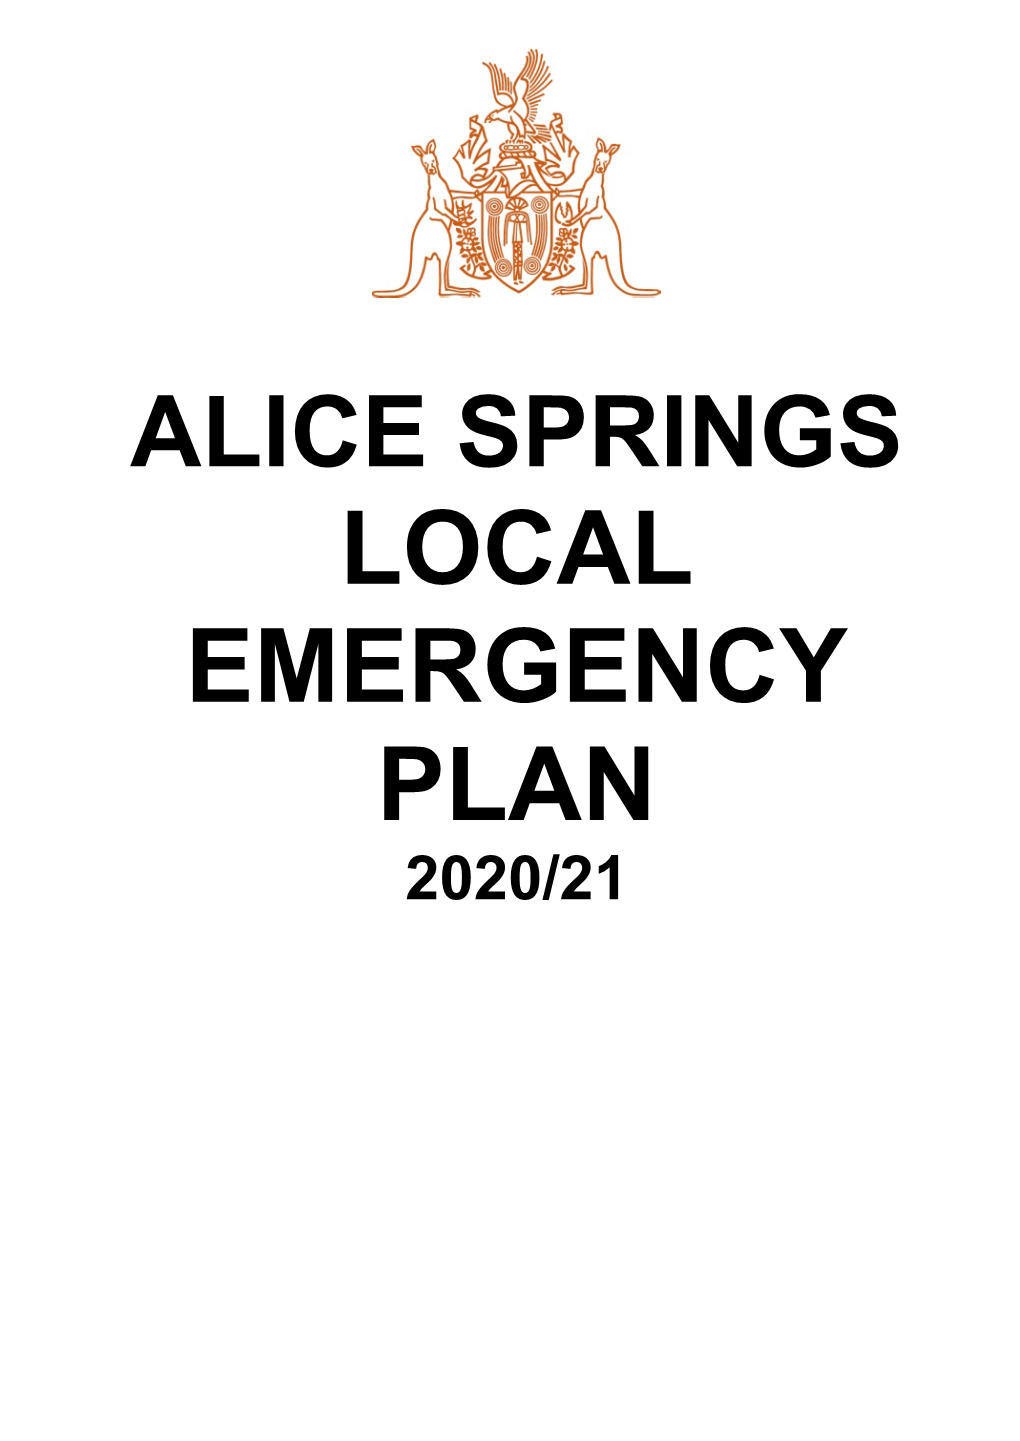 Local Emergency Plan 2020/21